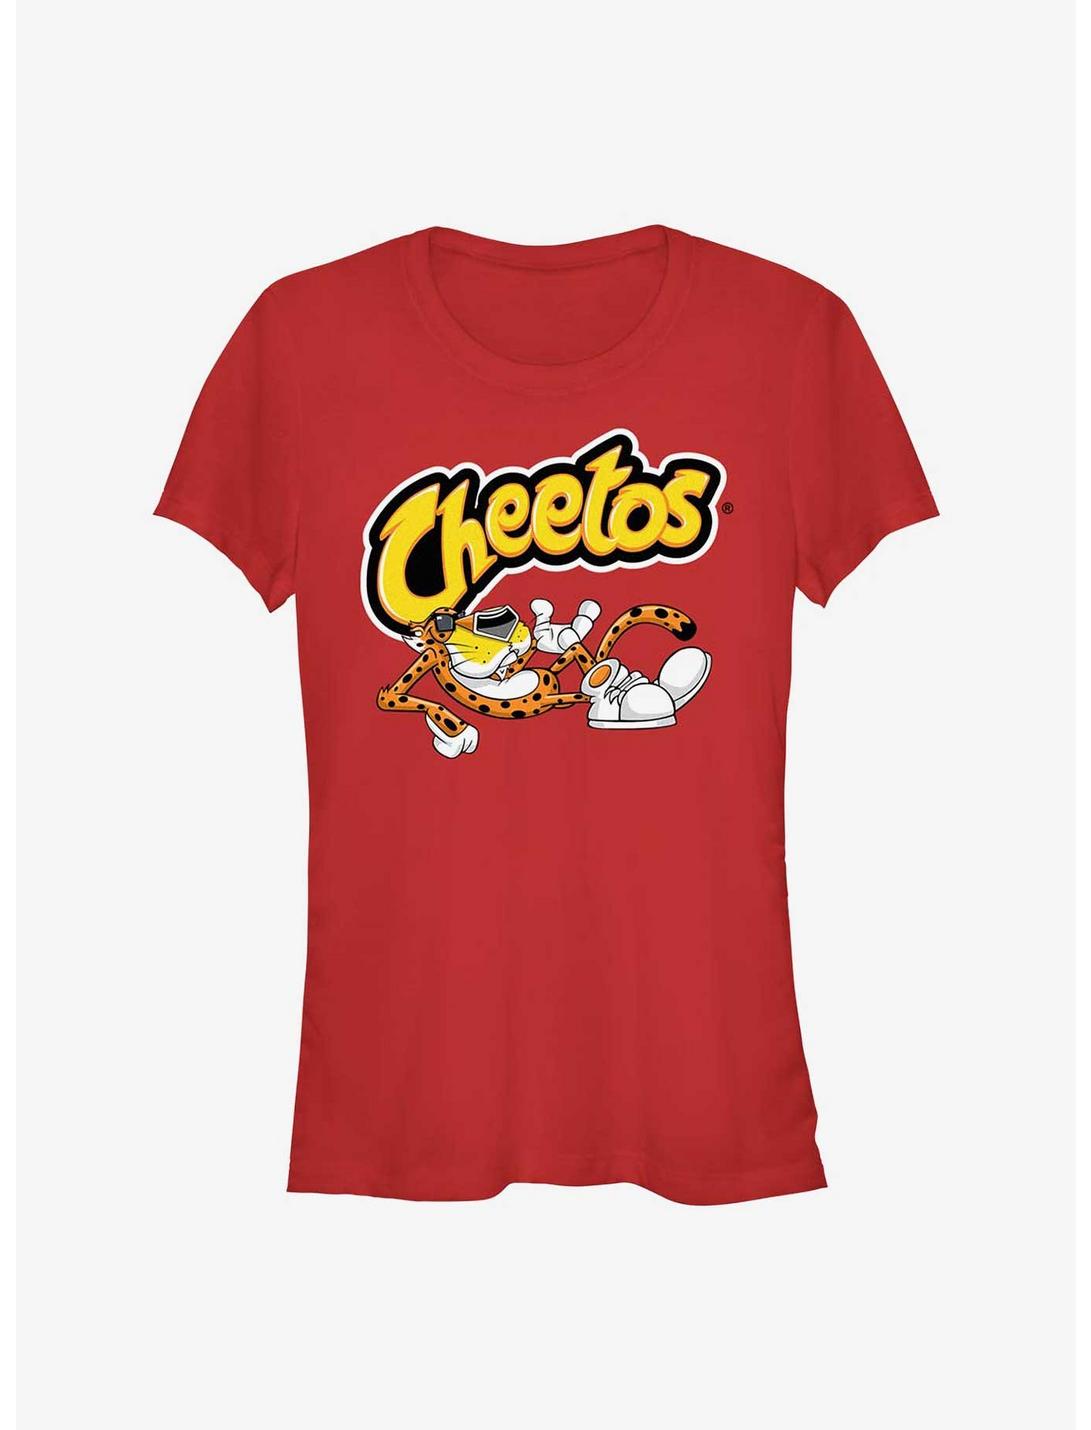 Cheetos Chester Recline Girls T-Shirt, RED, hi-res